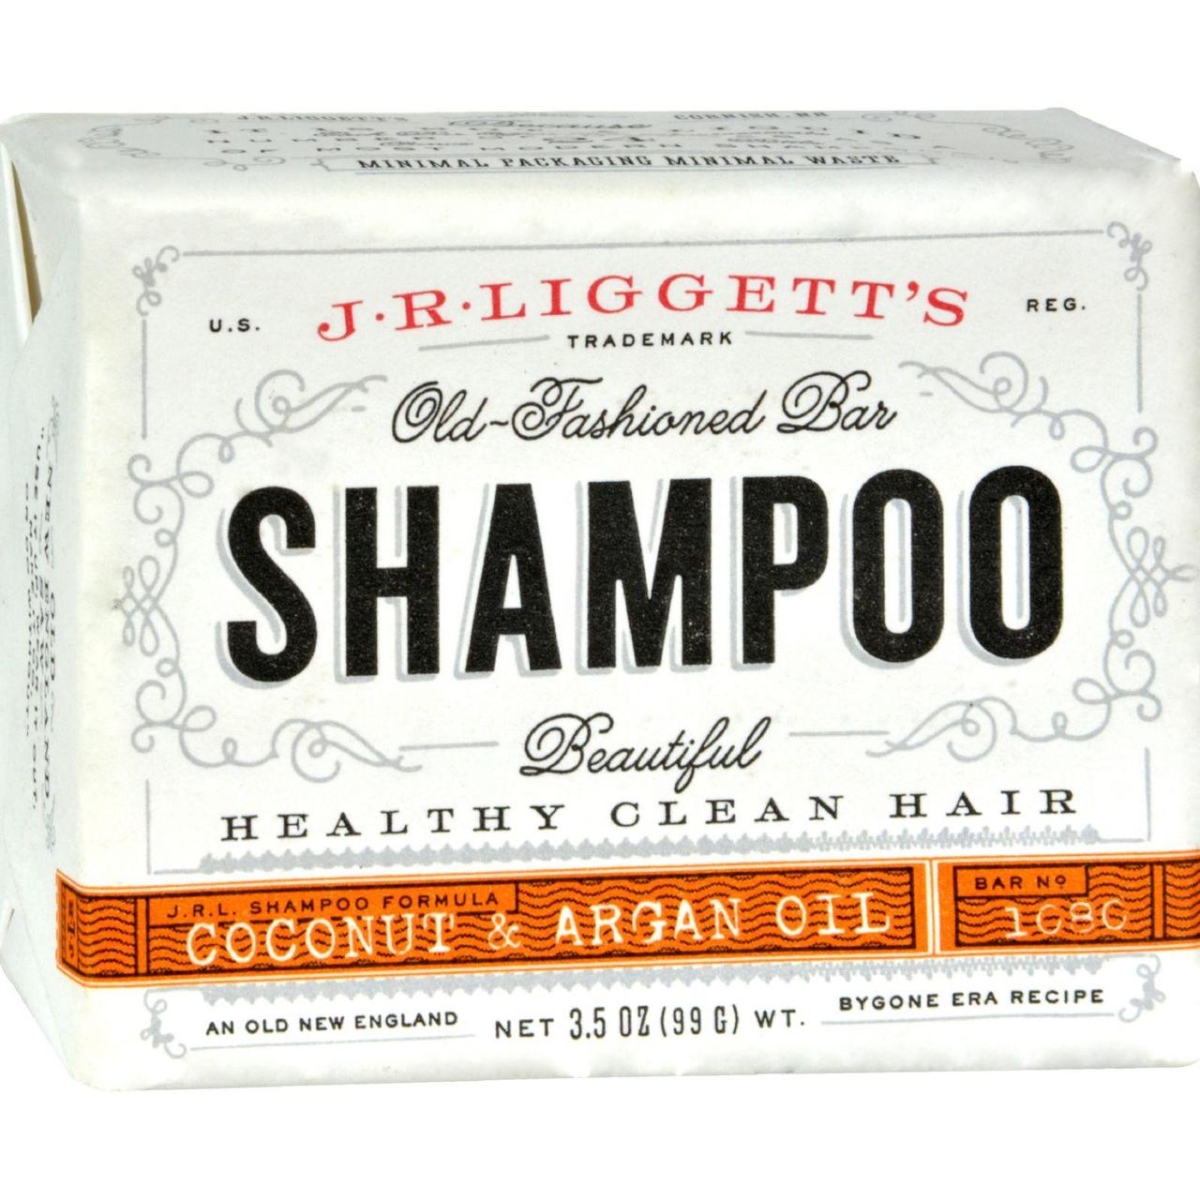 Hg1160290 3.5 Oz Shampoo Bar - Coconut & Argan